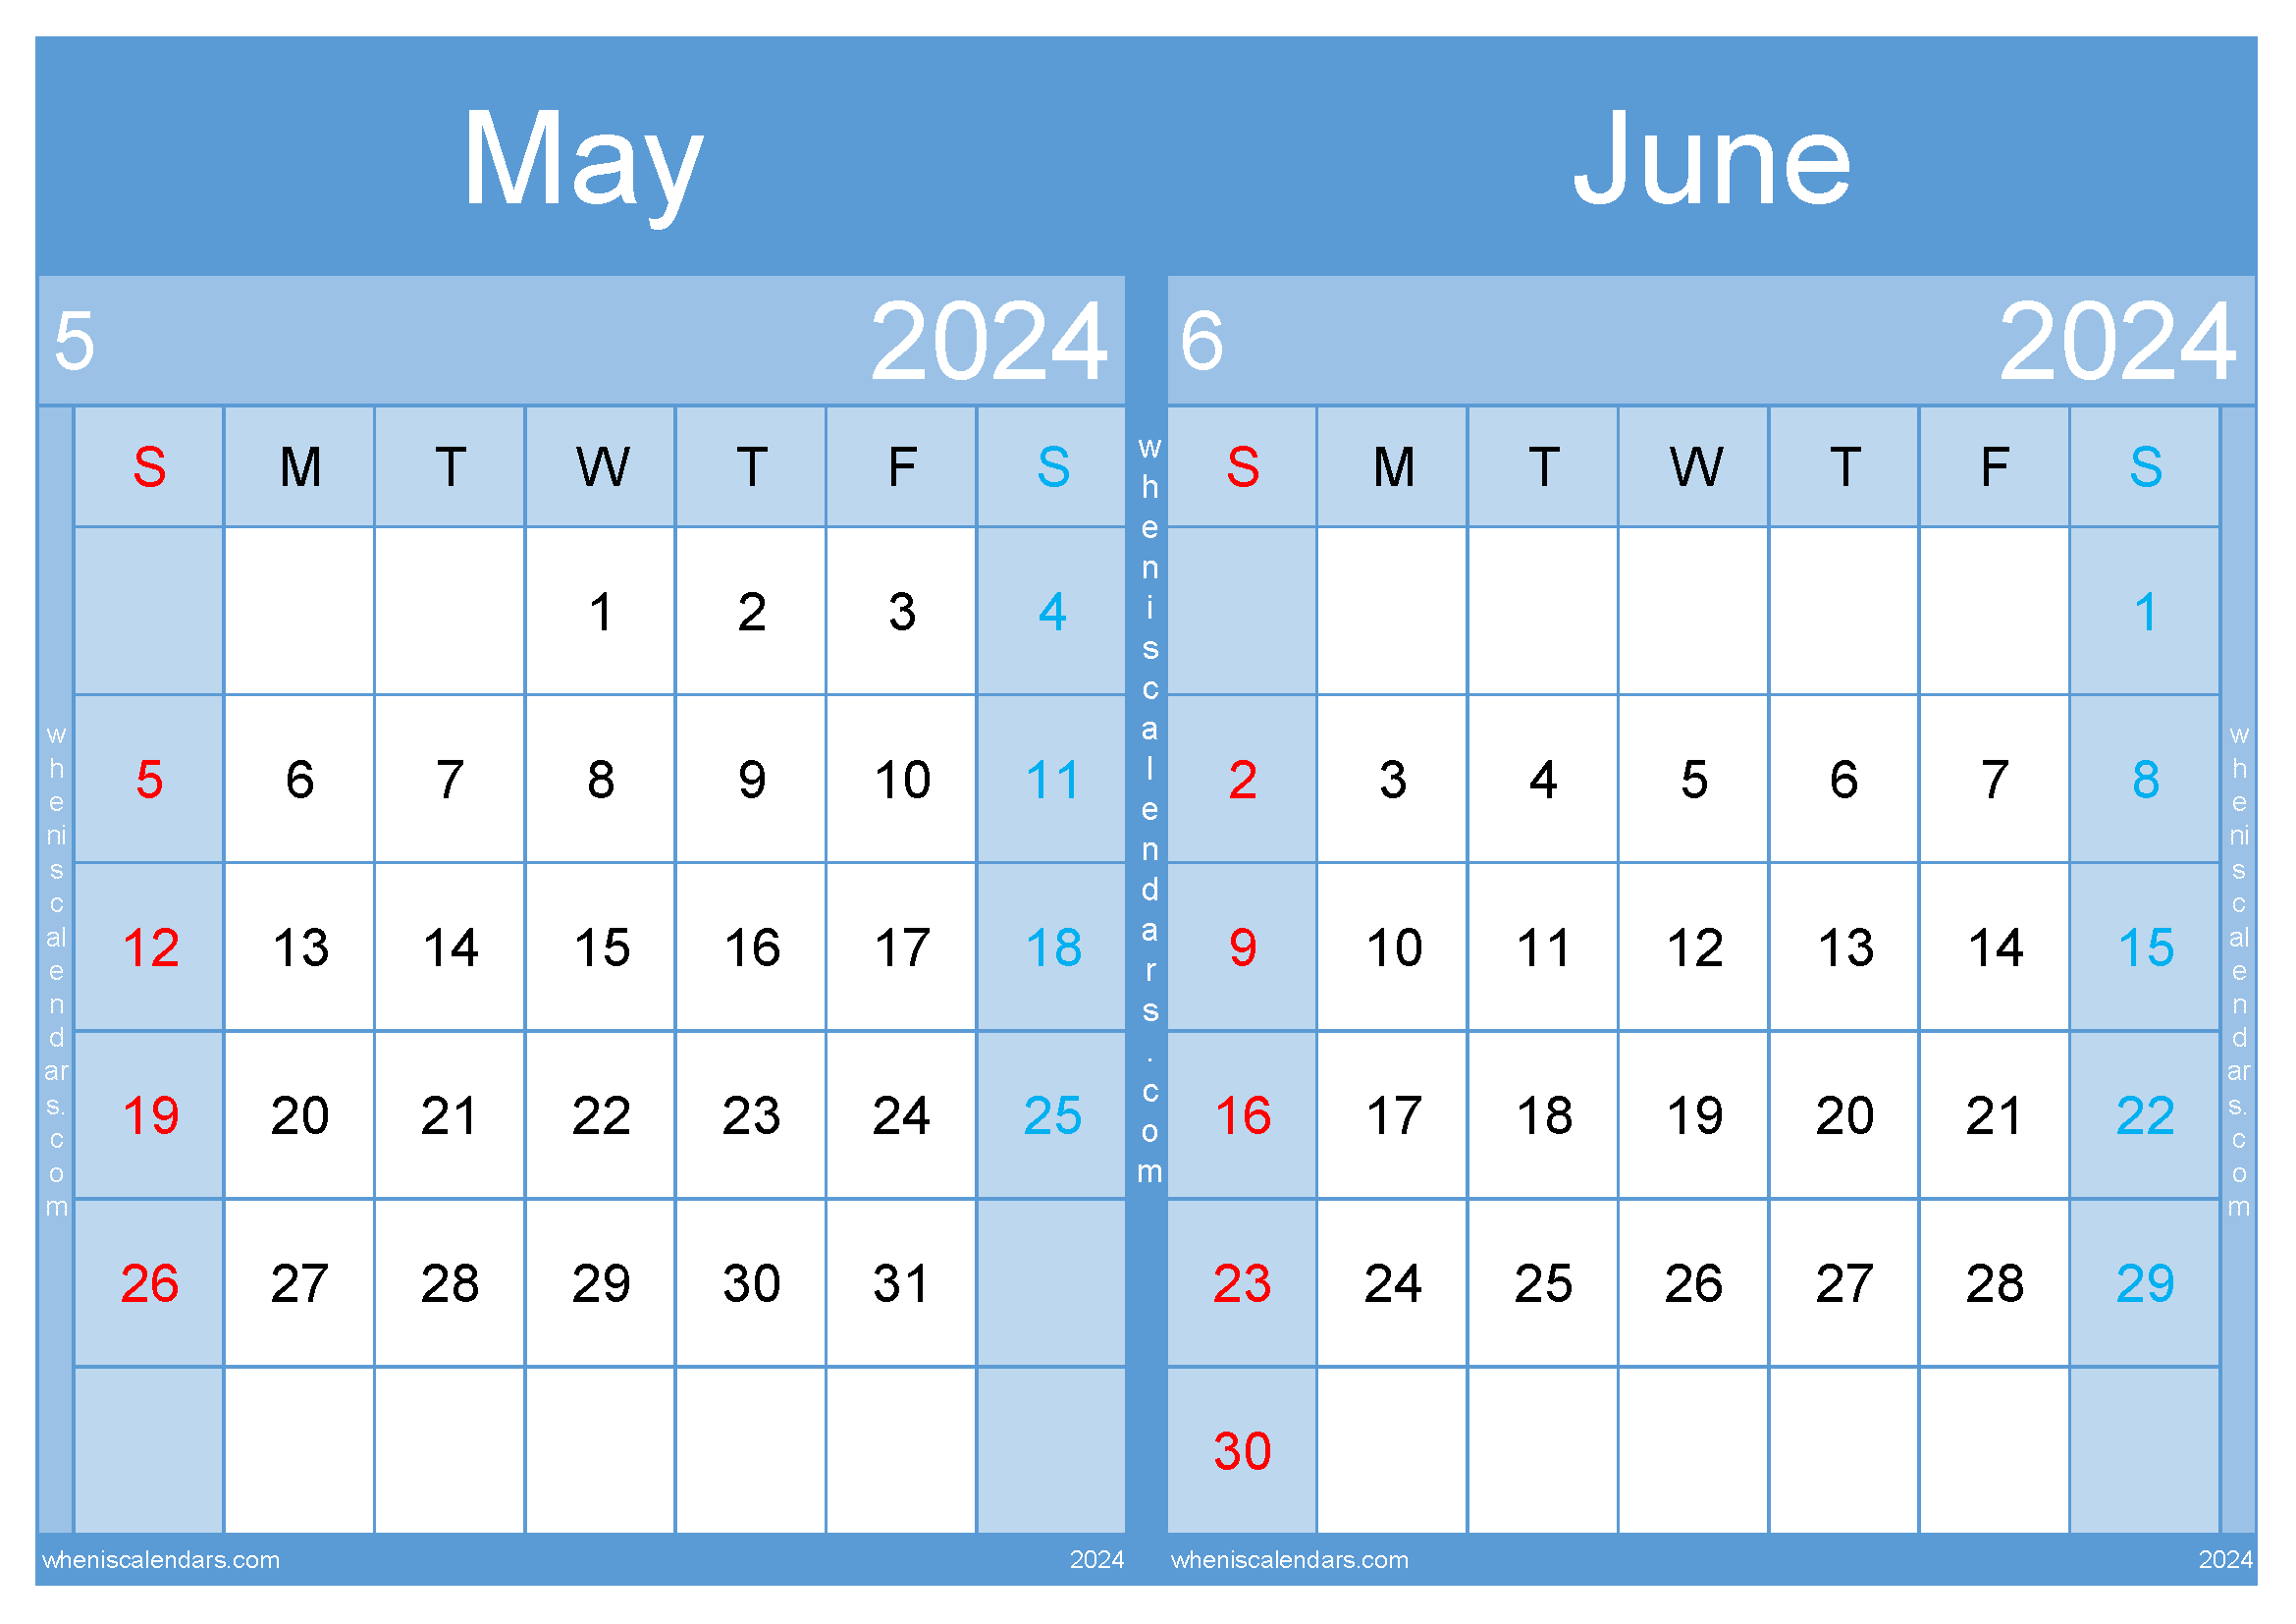 Download calendar for May June 2024 A4 MJ242037